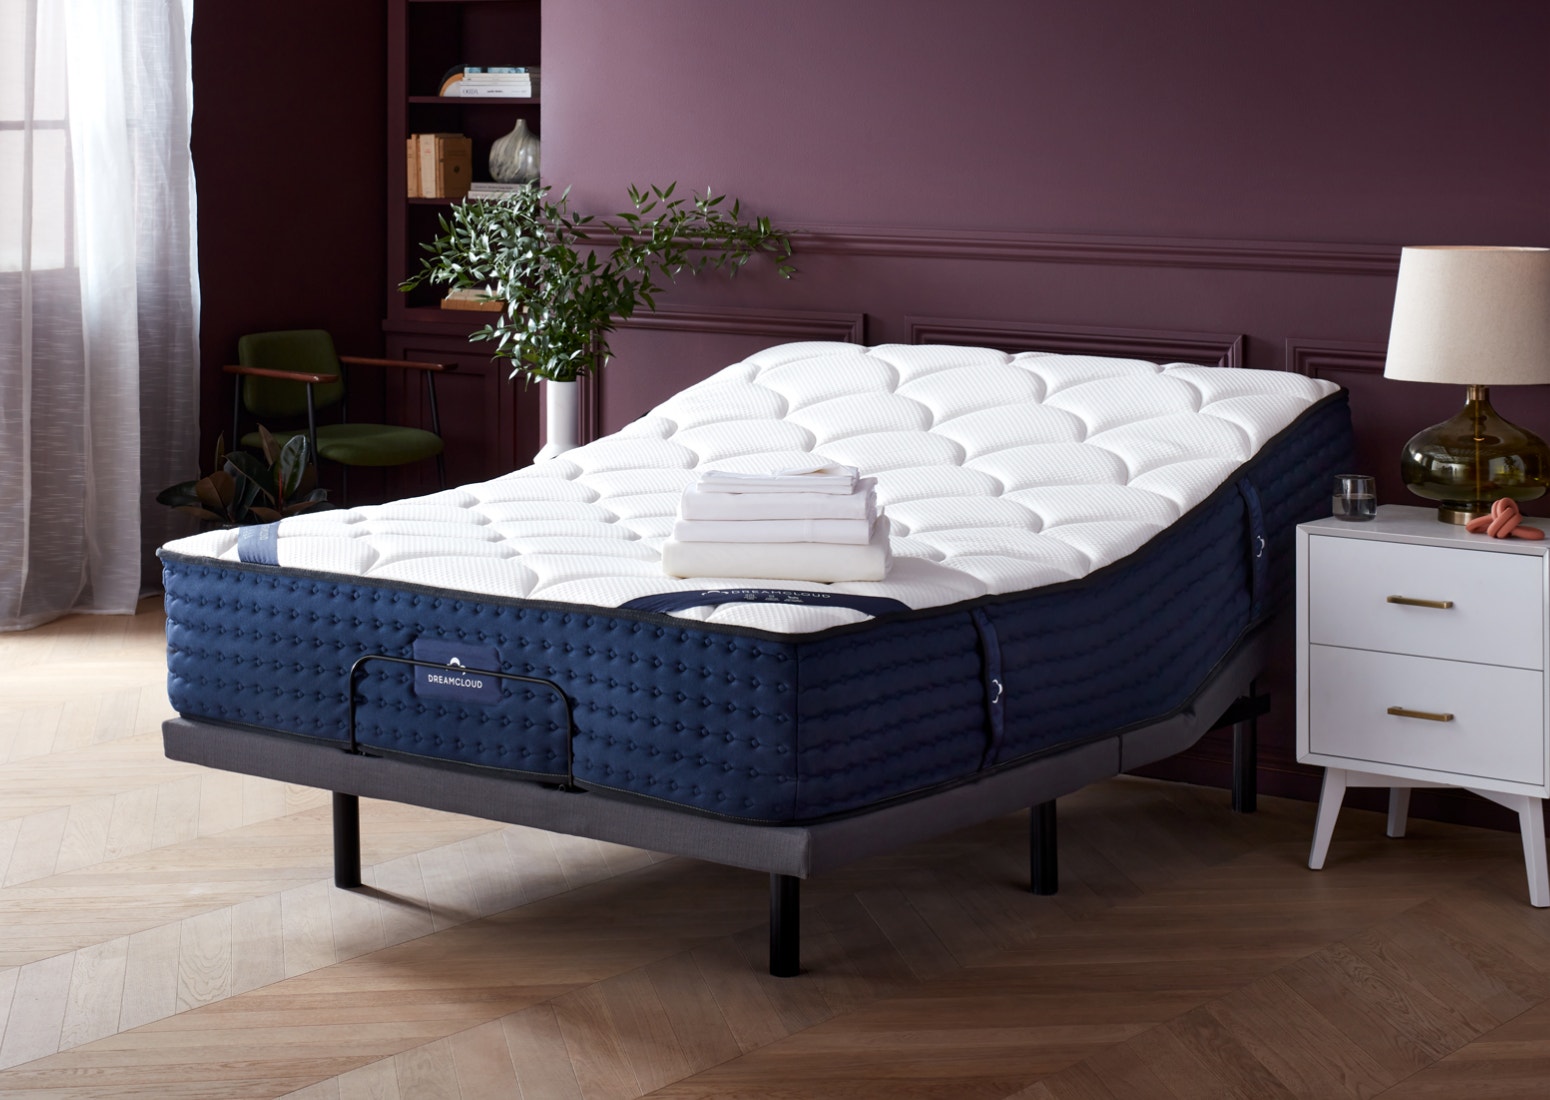 Queen Size Adjustable Bed Frames, Adjustable Bed Base Queen